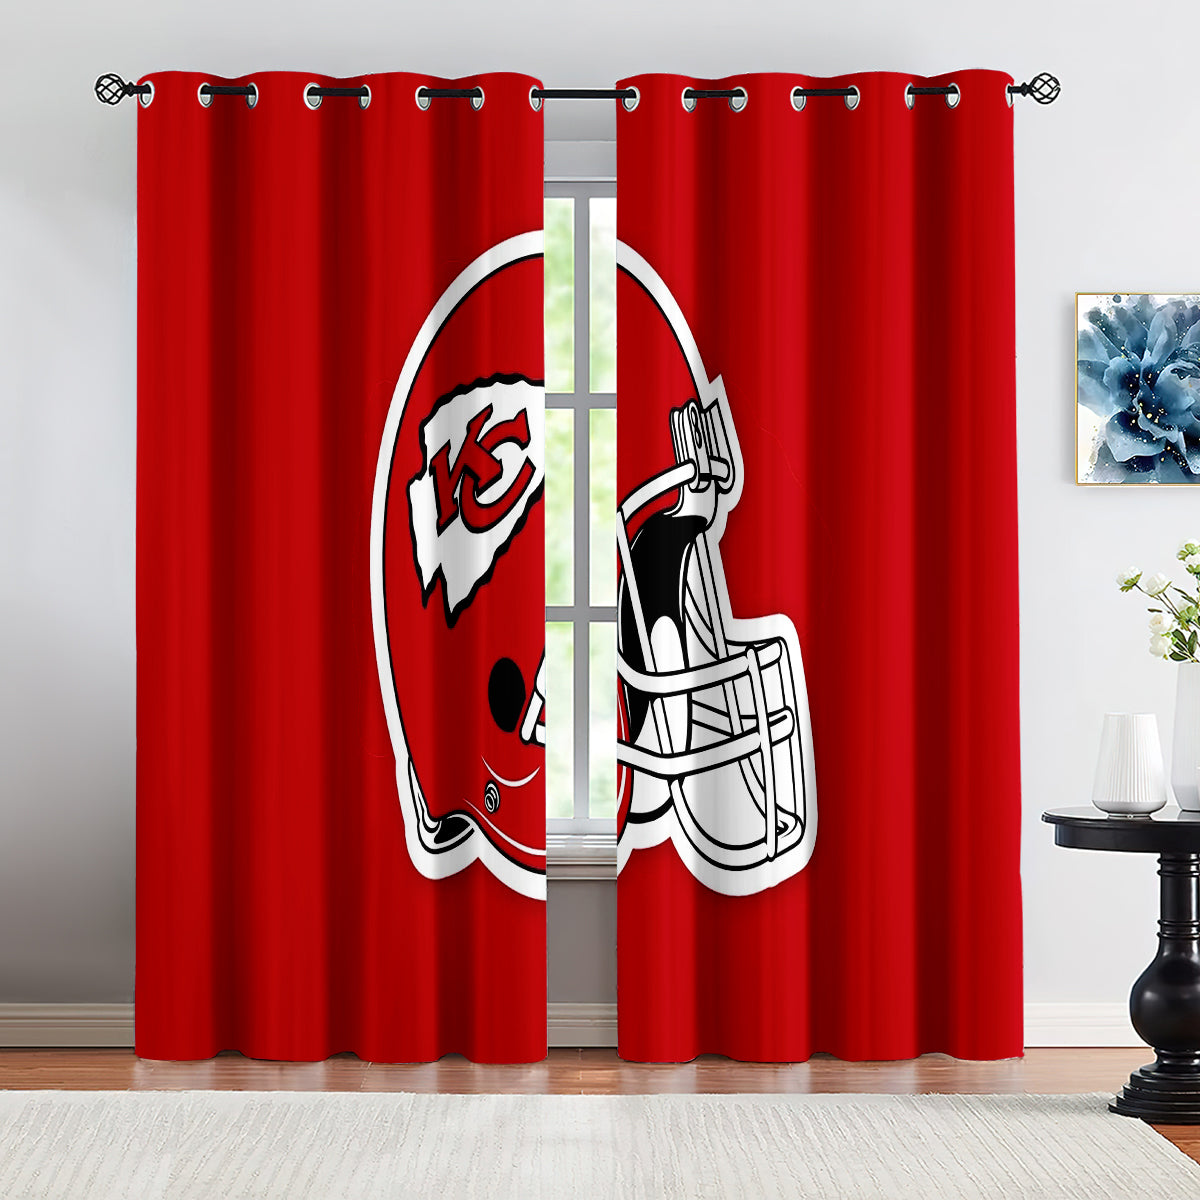 Kansas City Chiefs Football League Curtains Blackout Window Treatments Drapes Room Decor